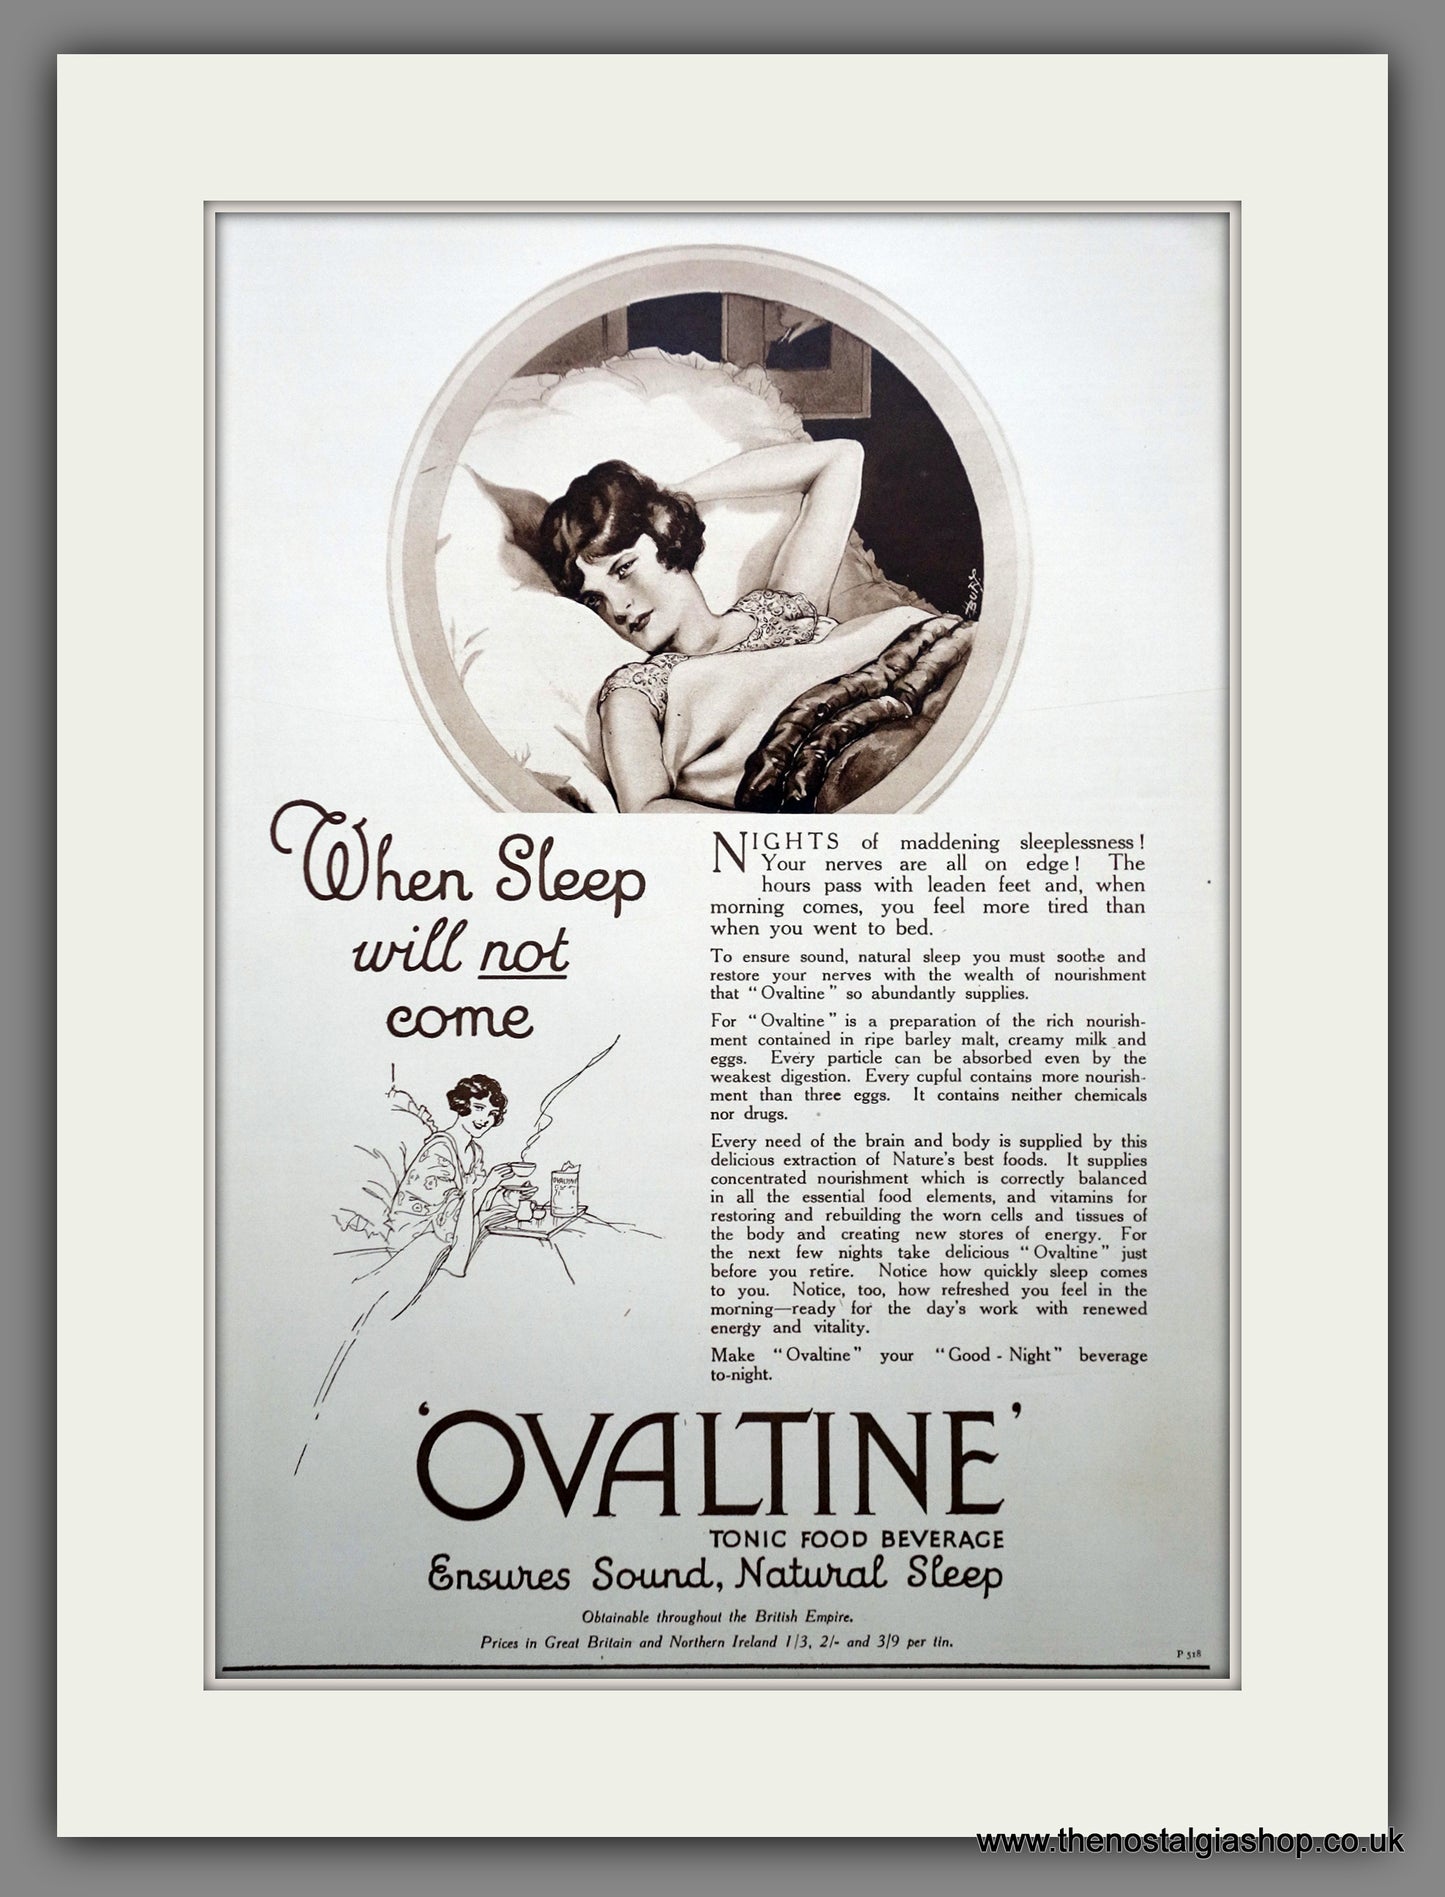 Ovaltine Food Beverage. Original Advert 1929 (ref AD301076)